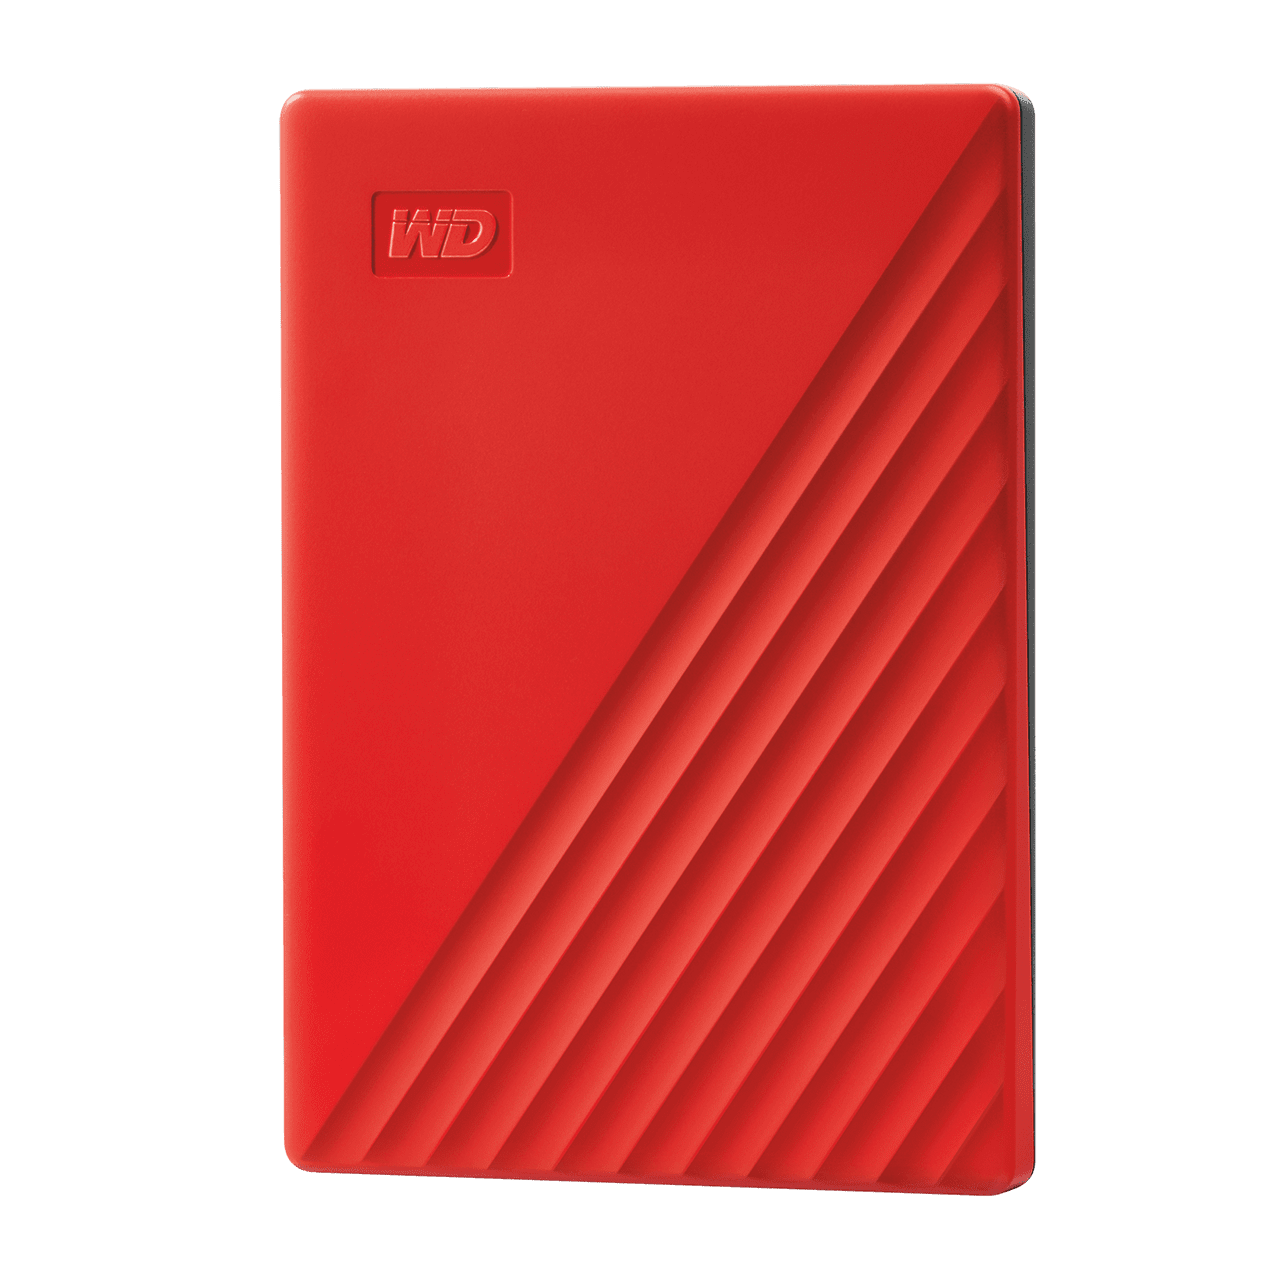 My Passport 便携式硬盘 1TB  红色 - Image3